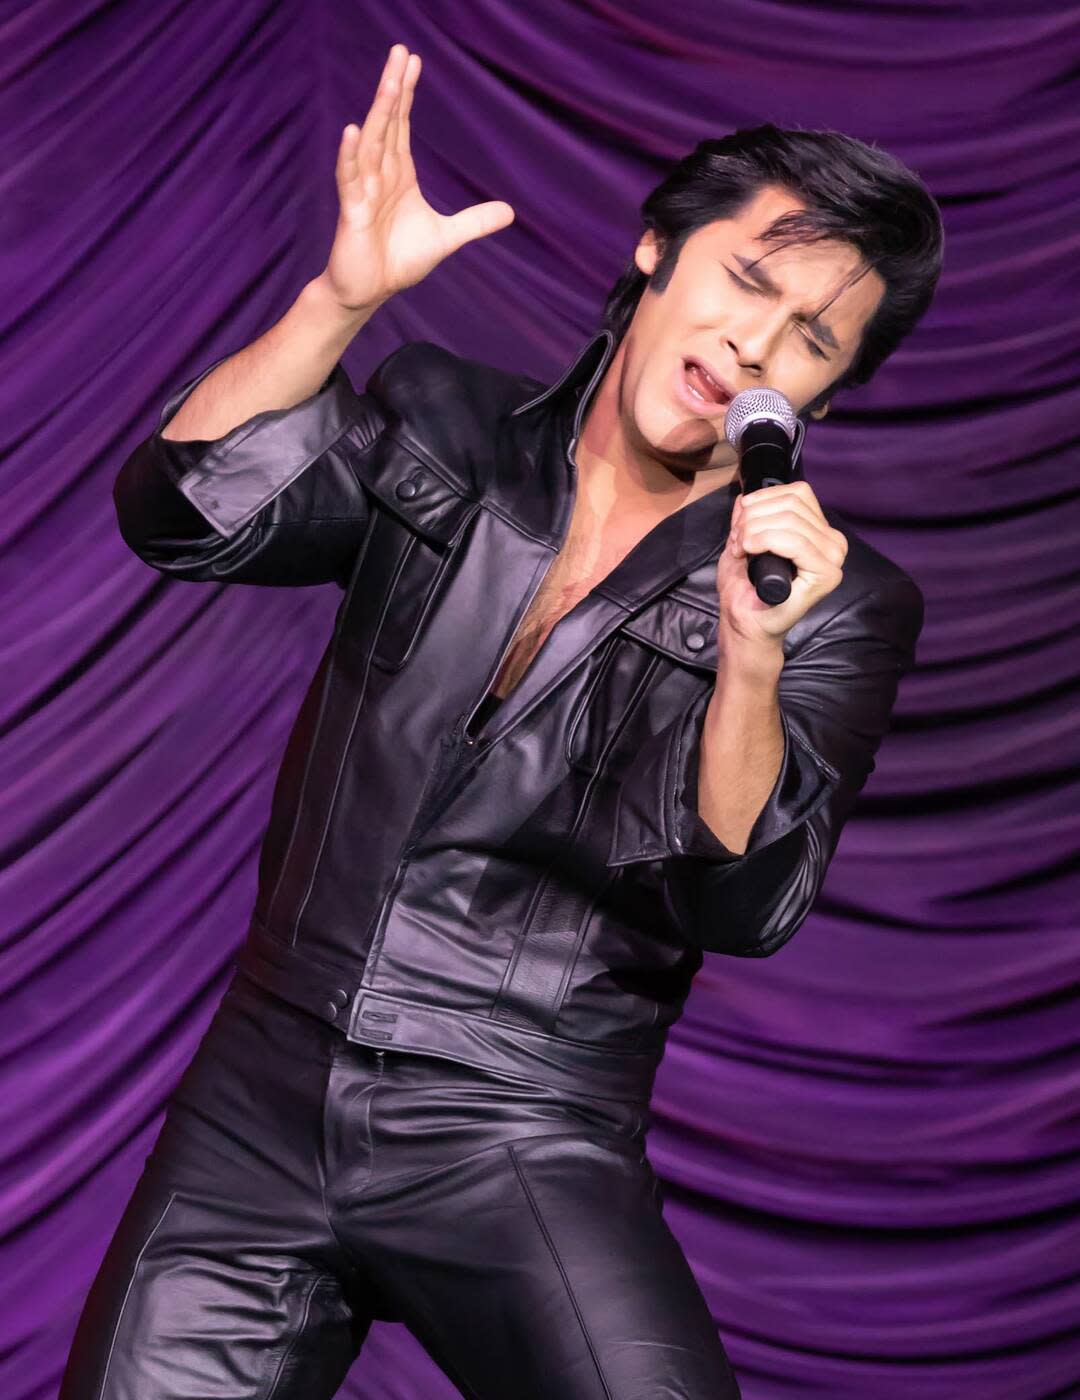 Cote Deonath performs as Elvis Presley and co-headlines the Mount Dora Elvis Weekend.